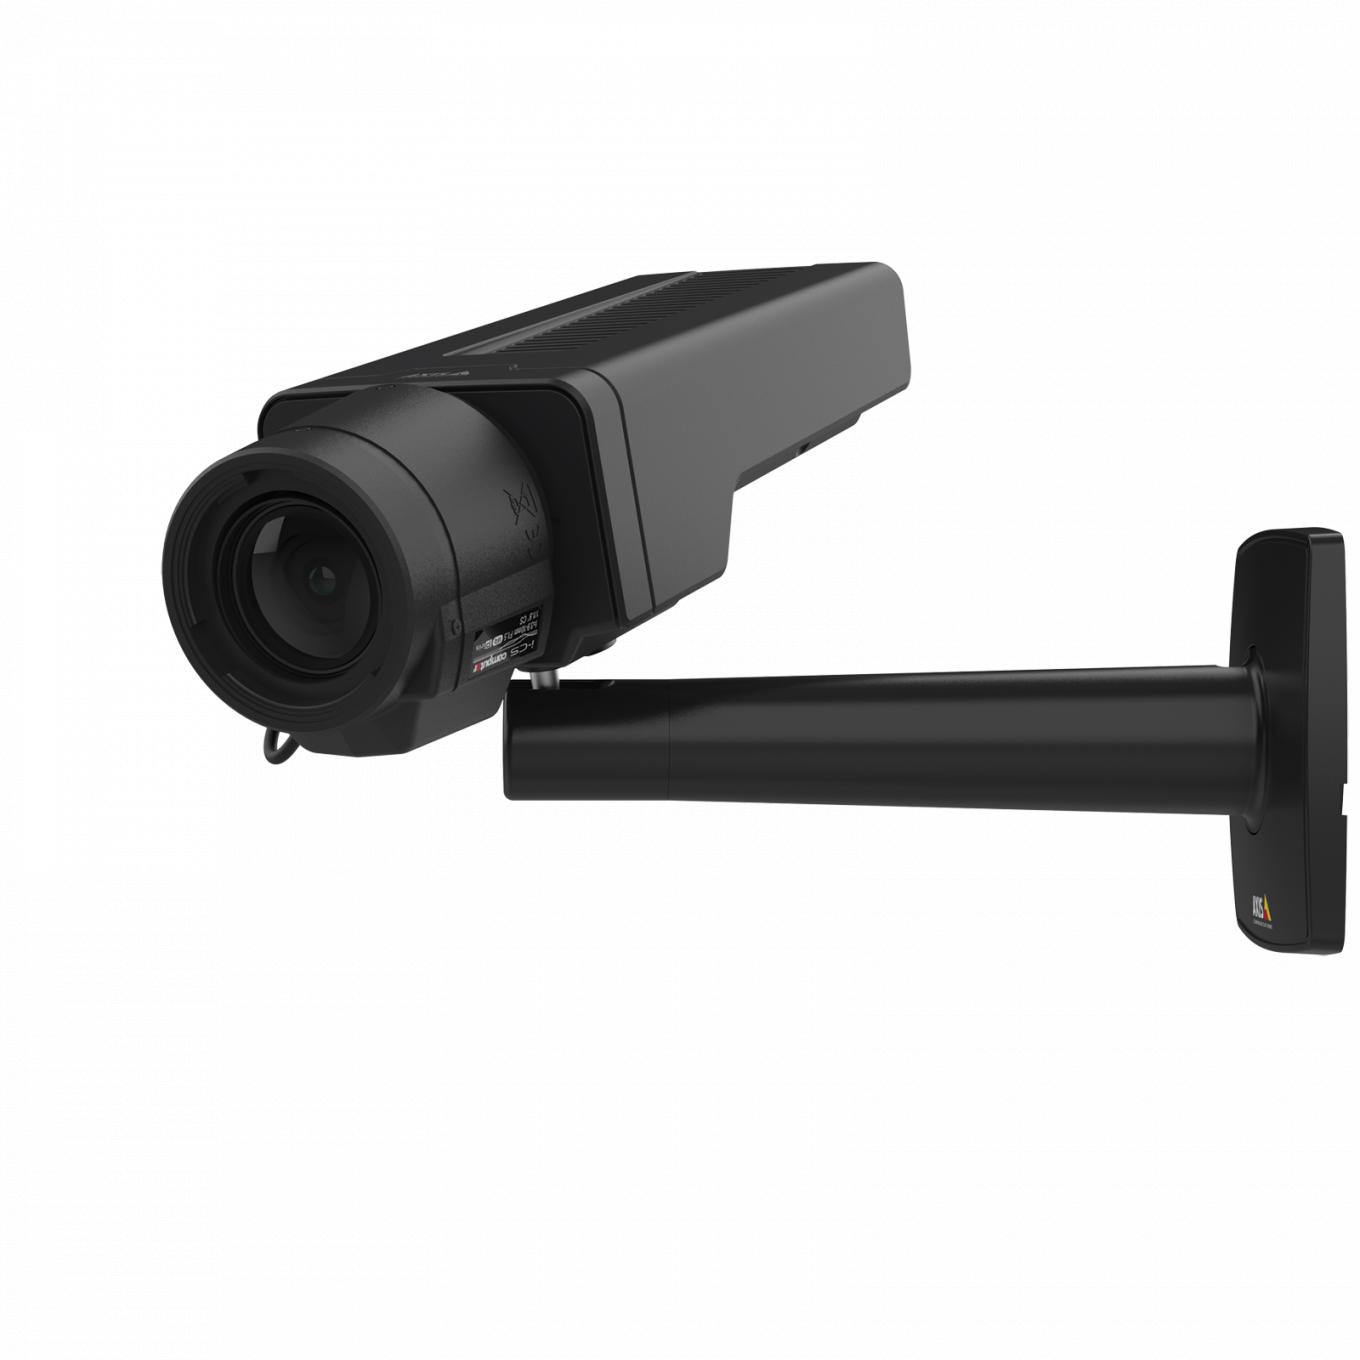 Корпусная камера AXIS Q1656 Box Camera, вид с левого угла